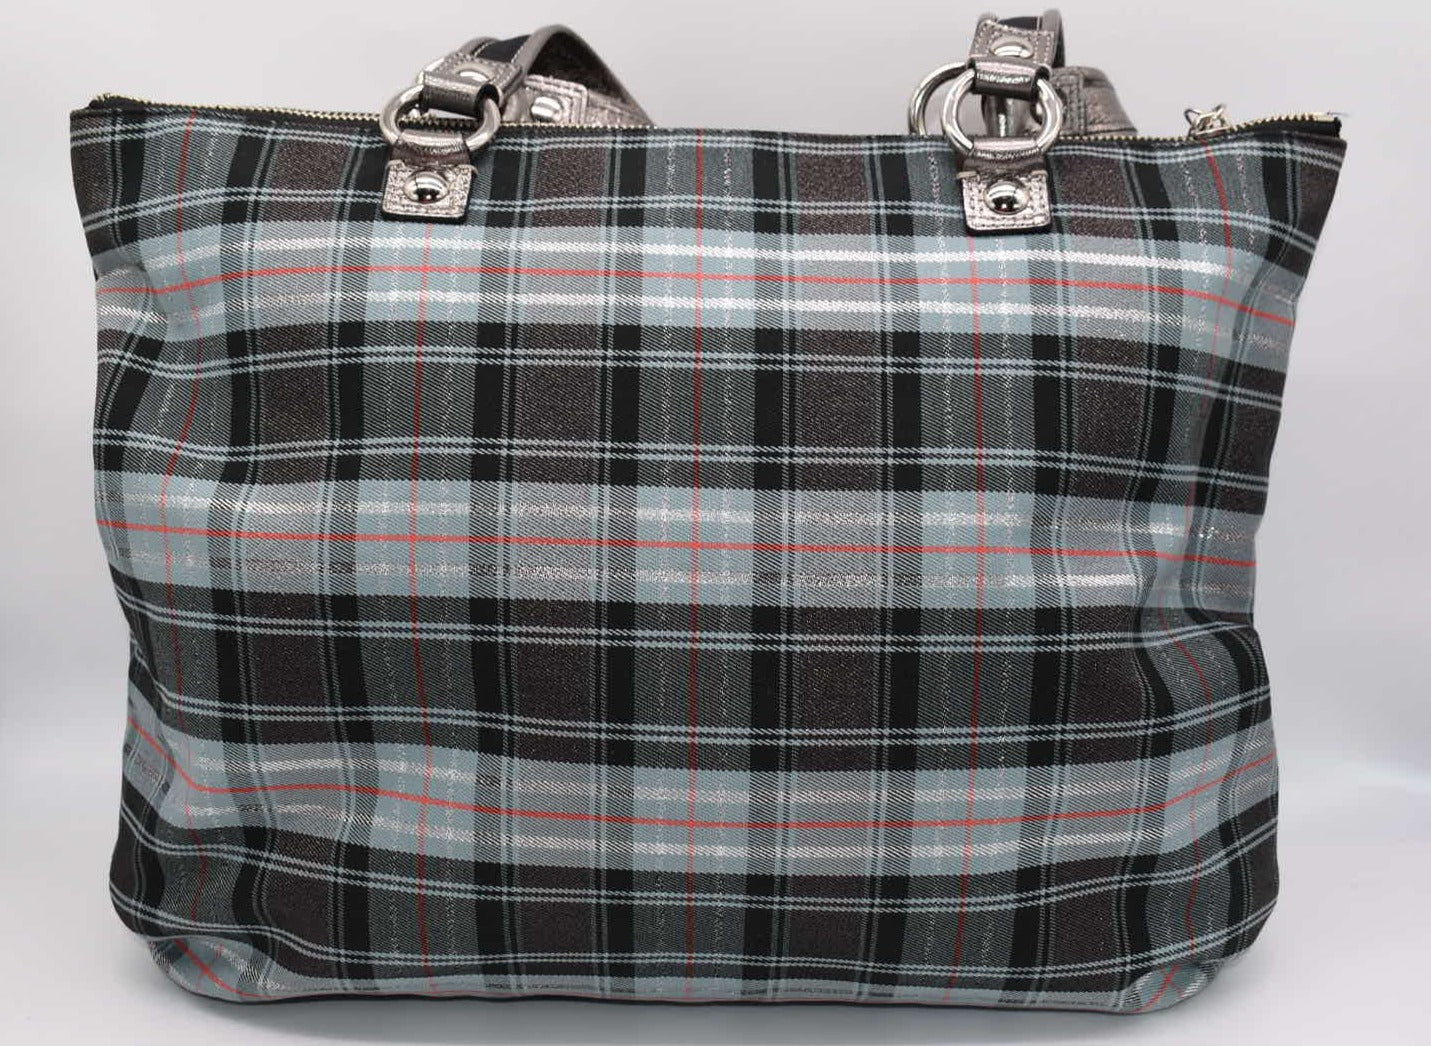 Coach Poppy Large Tartan Plaid Glam Tote Bag - Limited Edition